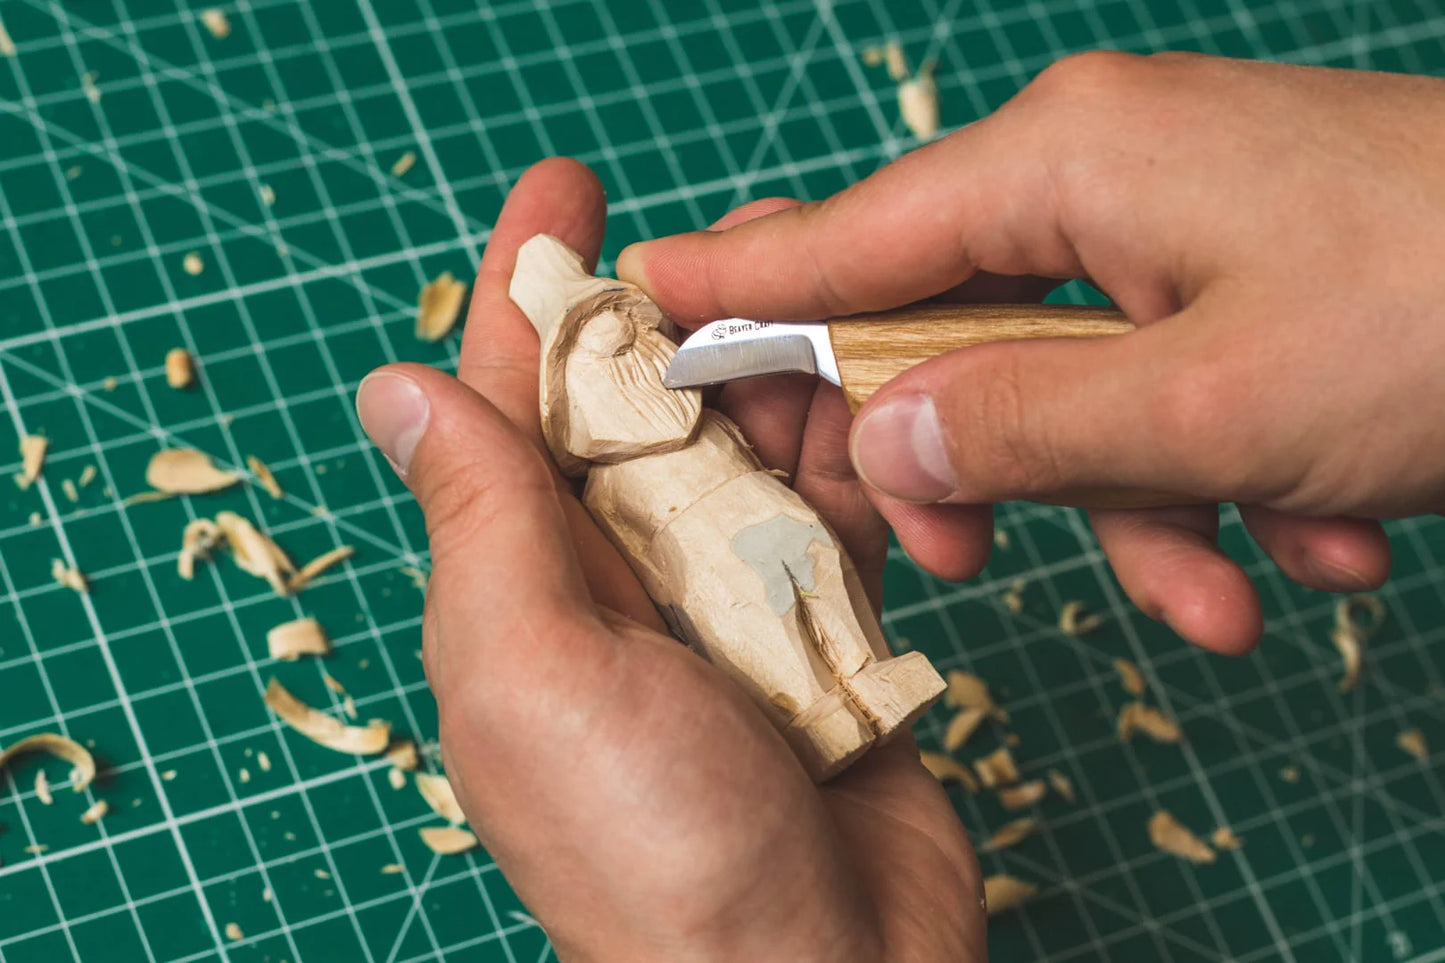 BeaverCraft C6 - Chip Carving Knife